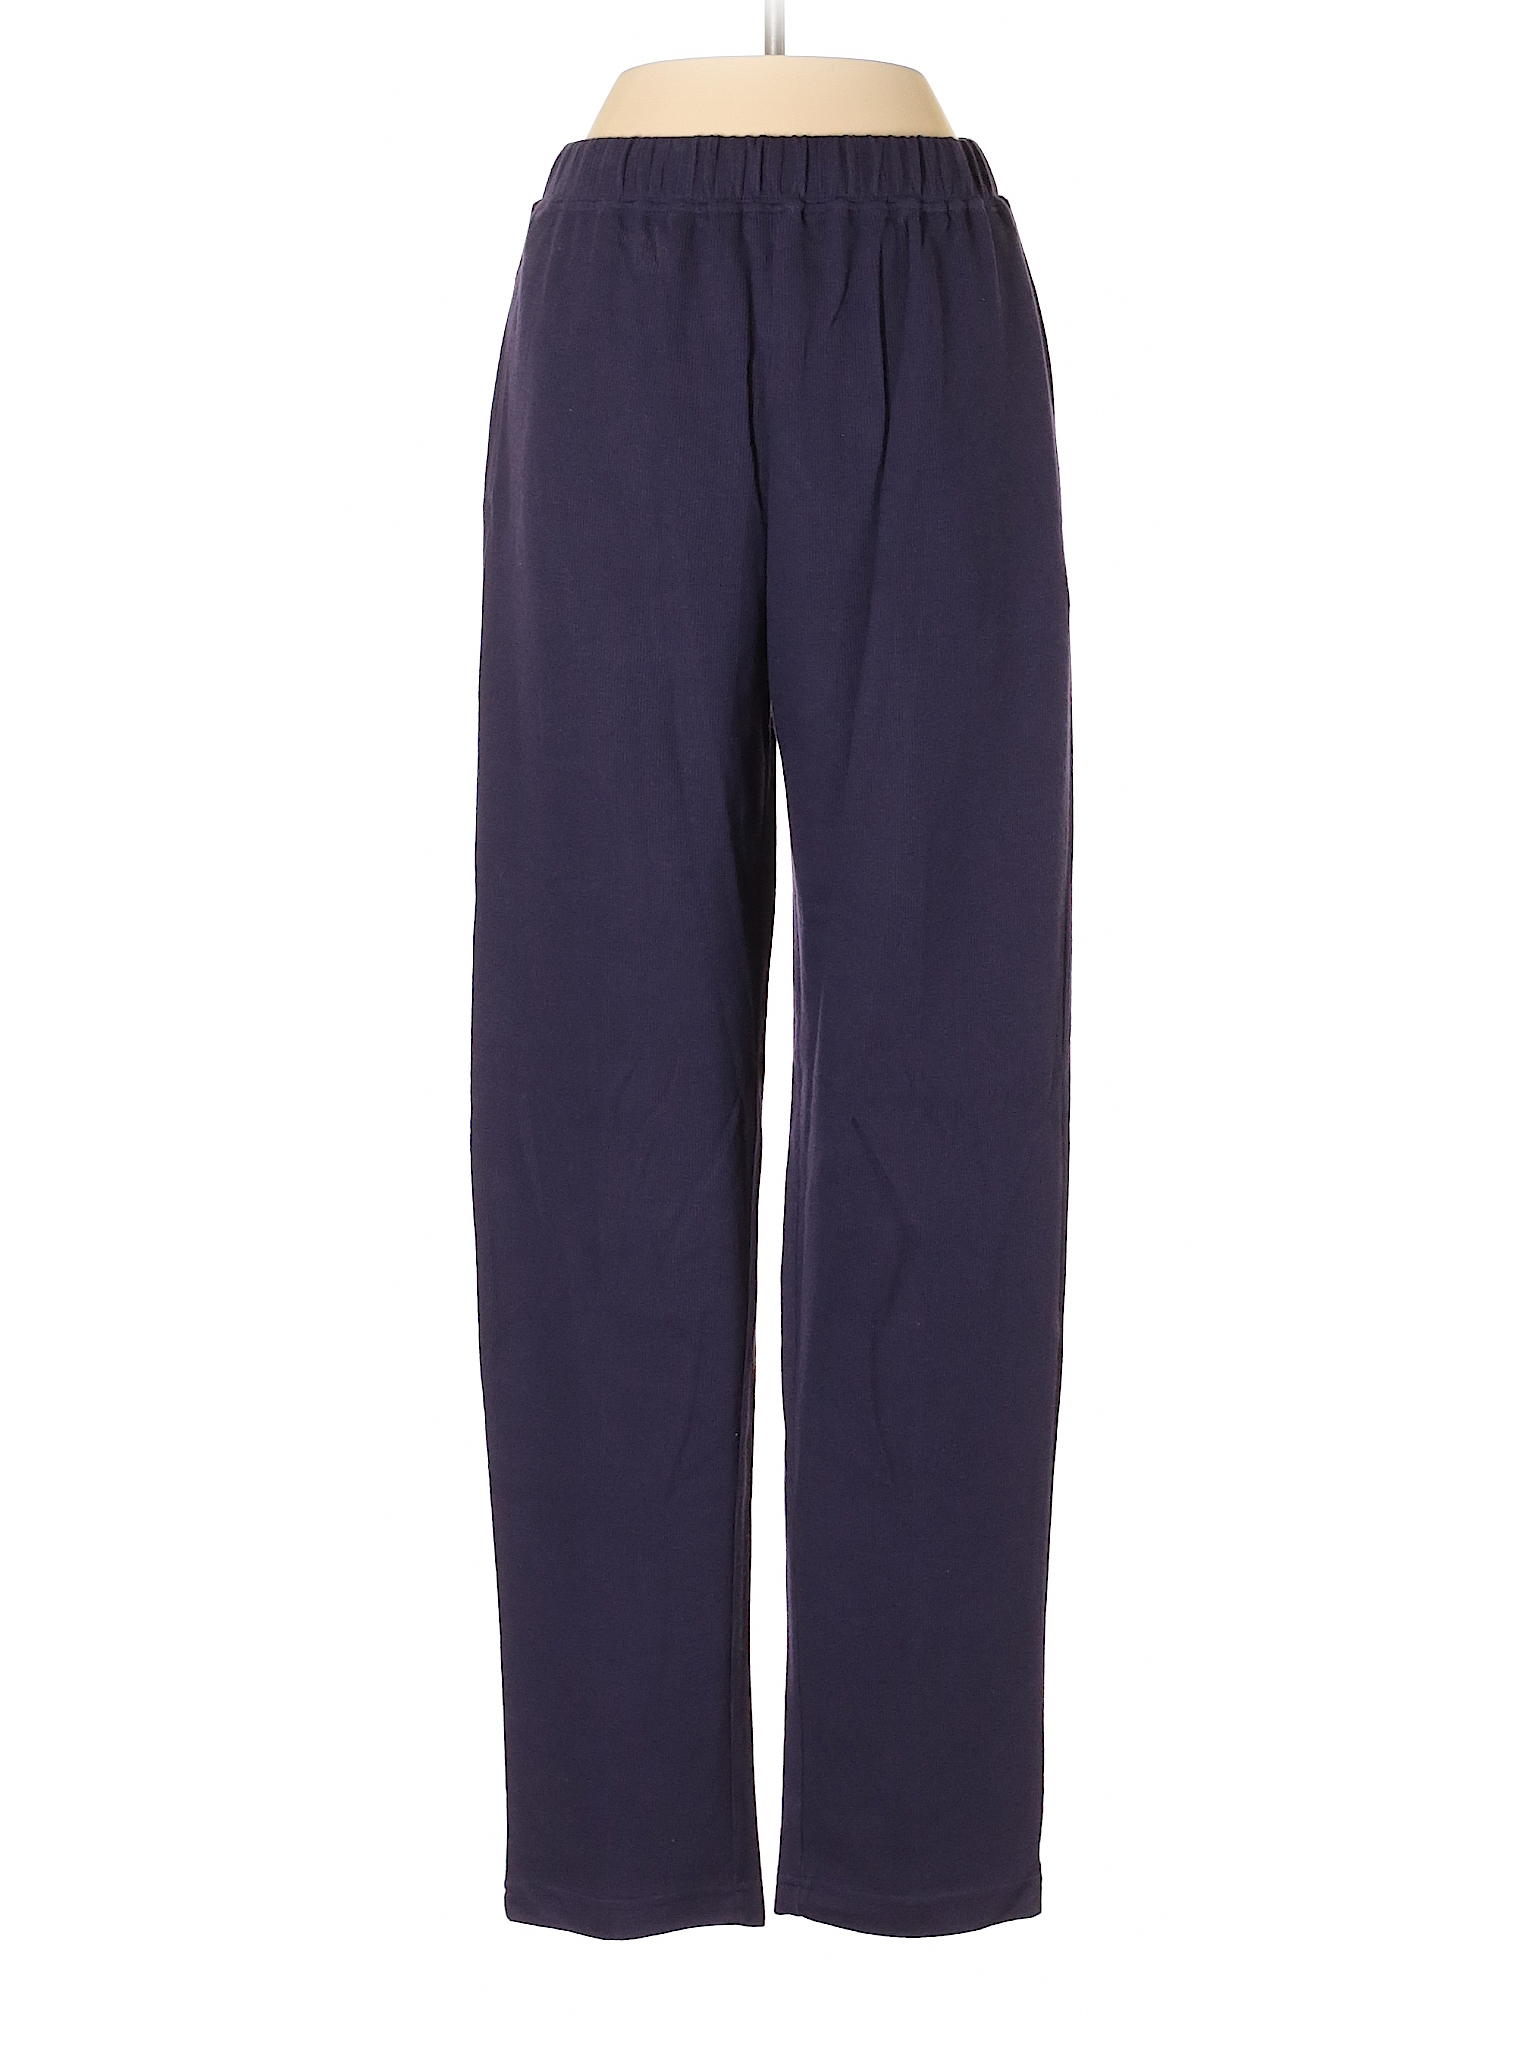 Bobbie Brooks Solid Dark Purple Casual Pants Size S - 58% off | thredUP